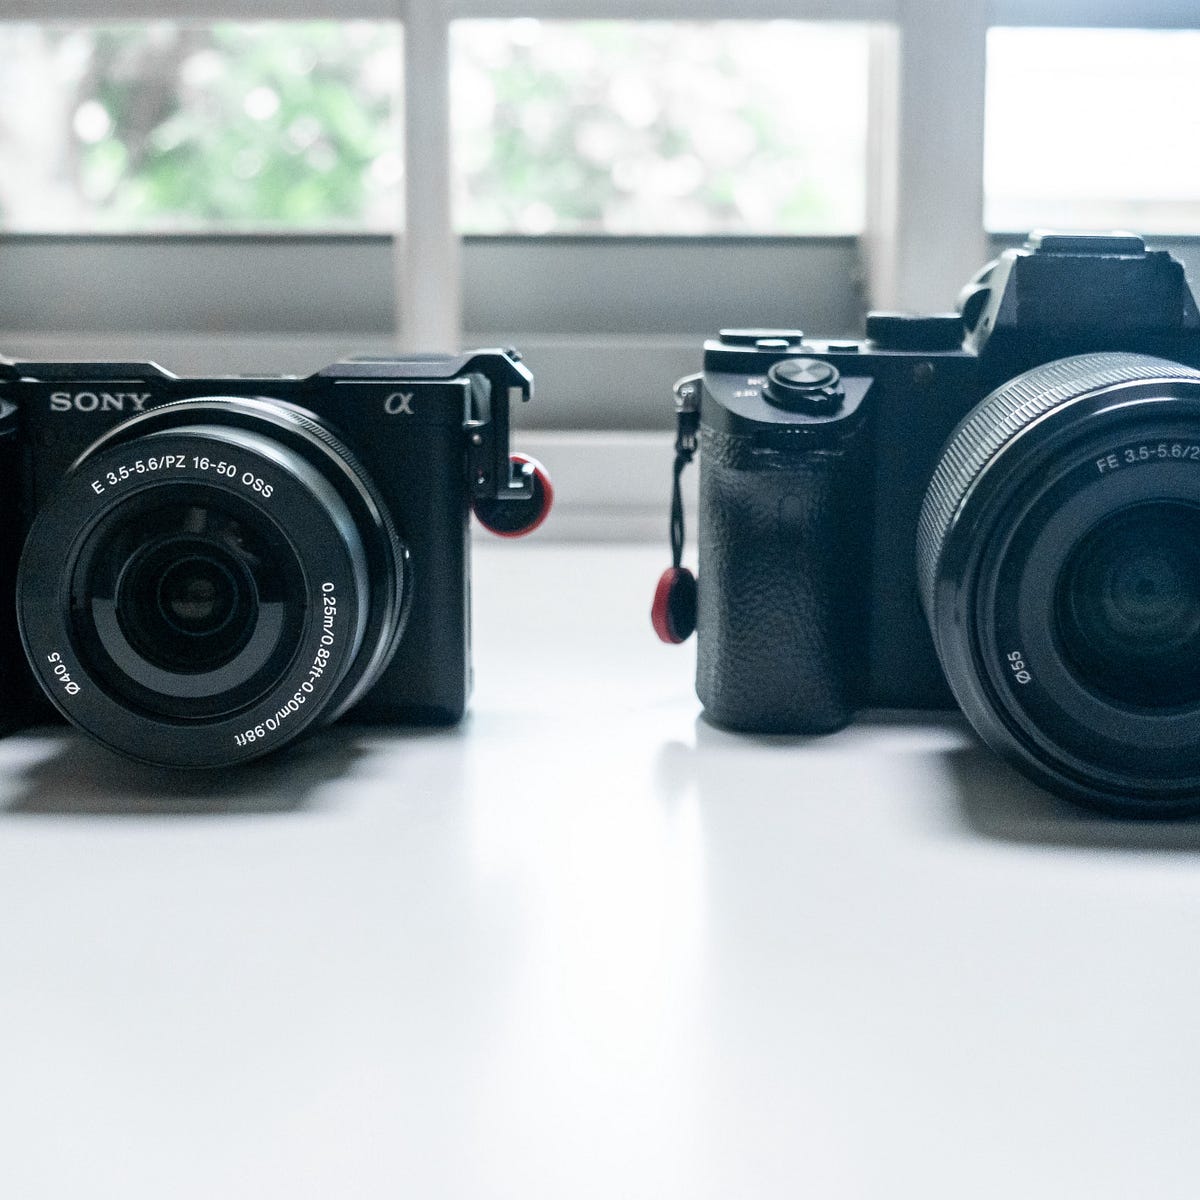 Full Frame VS APS-C Crop Cameras (Sony A7II vs A6400) | by Jameses Tech | Jameses Tech | Medium